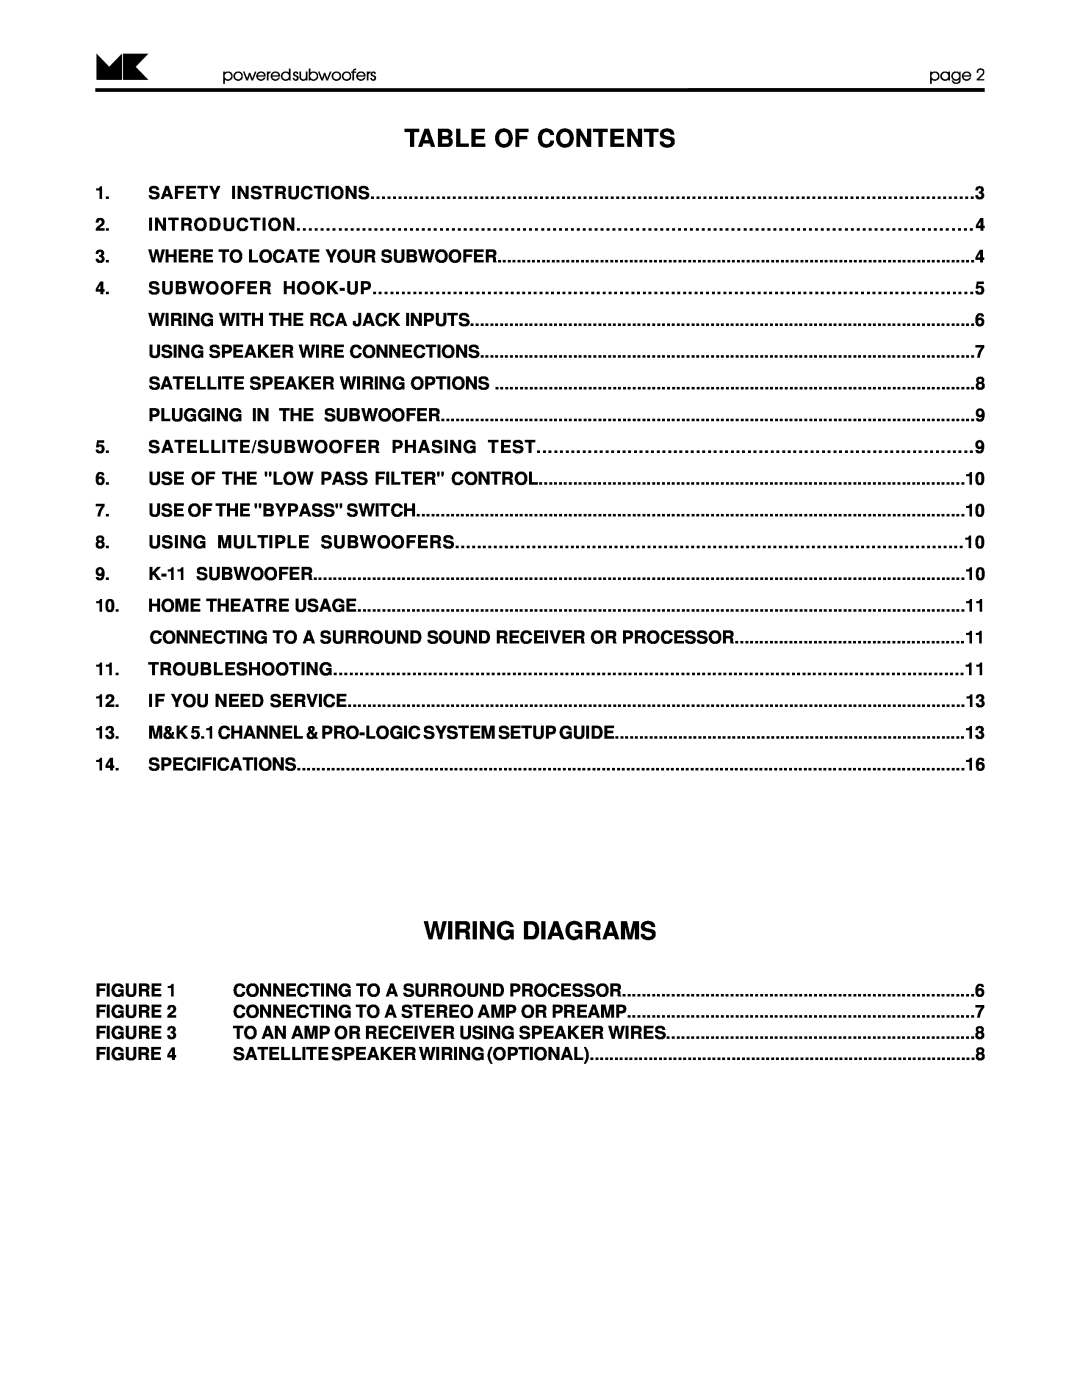 MK Sound K-11, K-10 Table Of Contents, Wiring Diagrams, Introduction, Subwoofer Hook-Up, Satellite/Subwoofer Phasing Test 